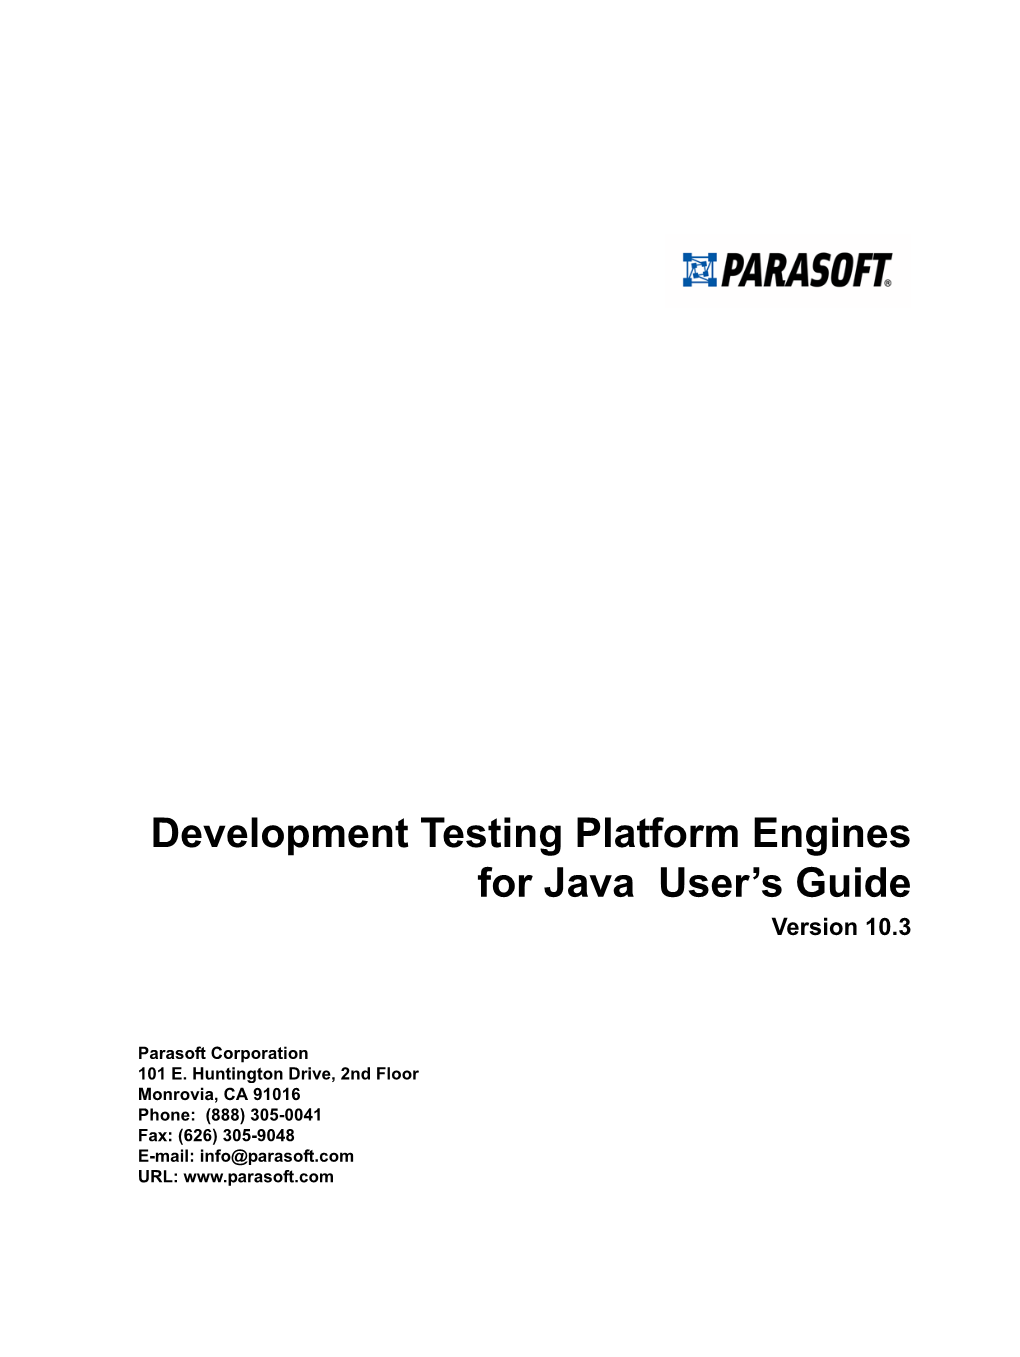 Development Testing Platform Engines for Java User's Guide